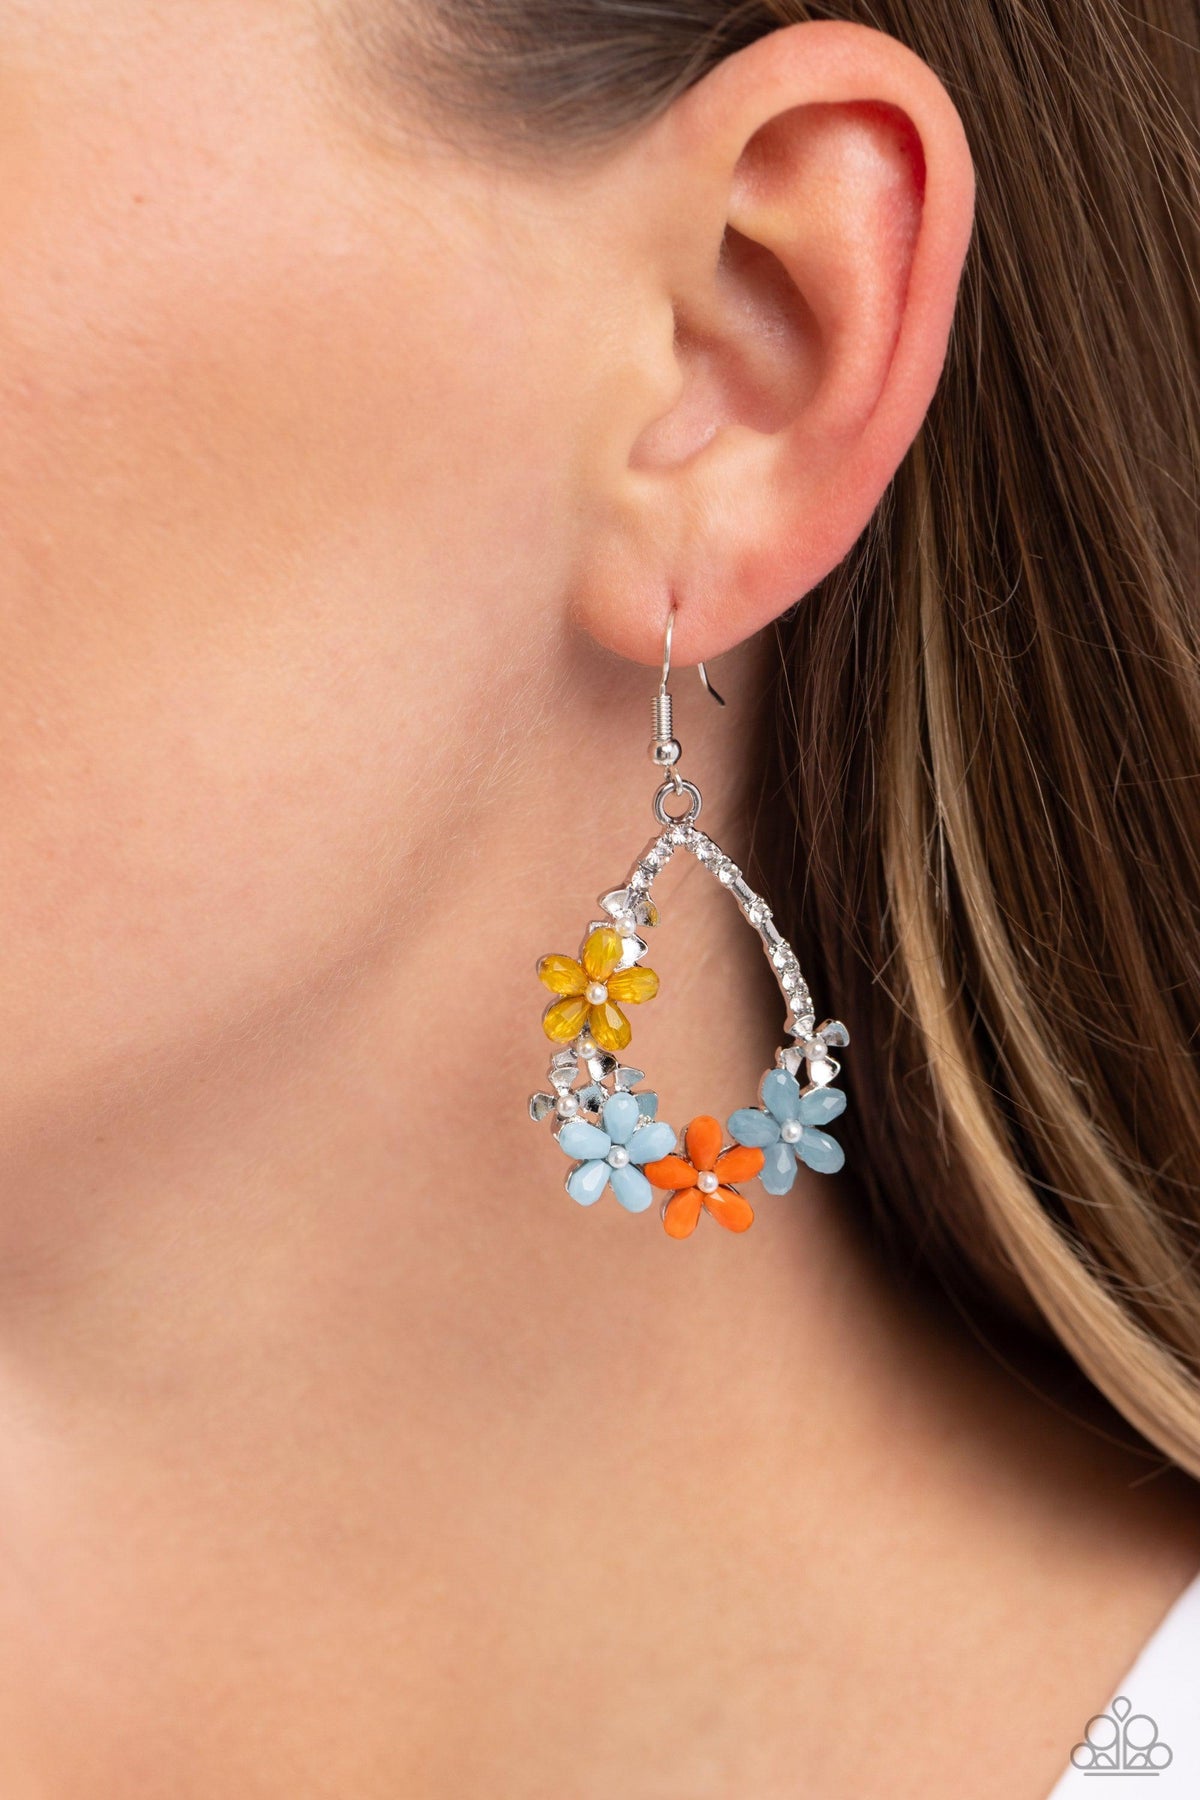 Boisterous Blooms Multi Flower Earrings - Paparazzi Accessories-on model - CarasShop.com - $5 Jewelry by Cara Jewels